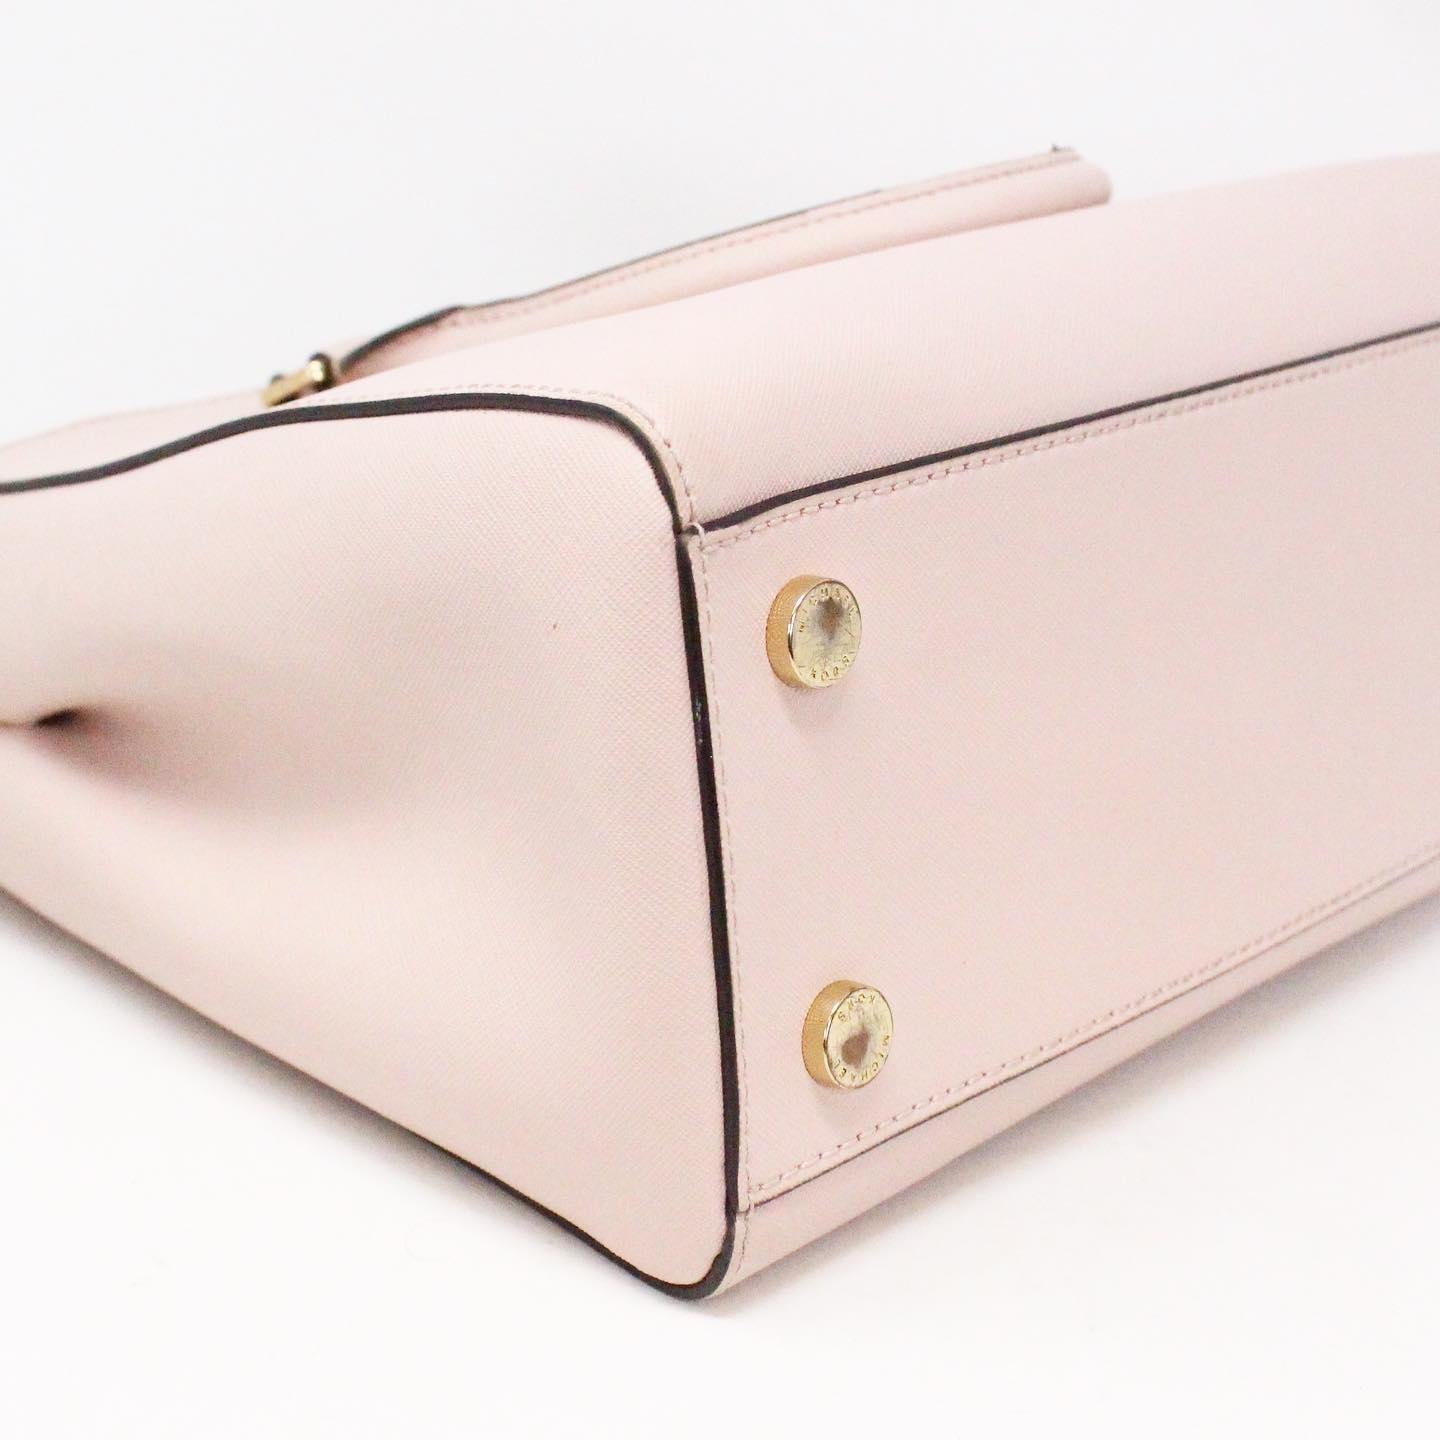 *ON SALE* MICHAEL KORS #36063 Blush Pink Saffiano Leather Handbag with Strap